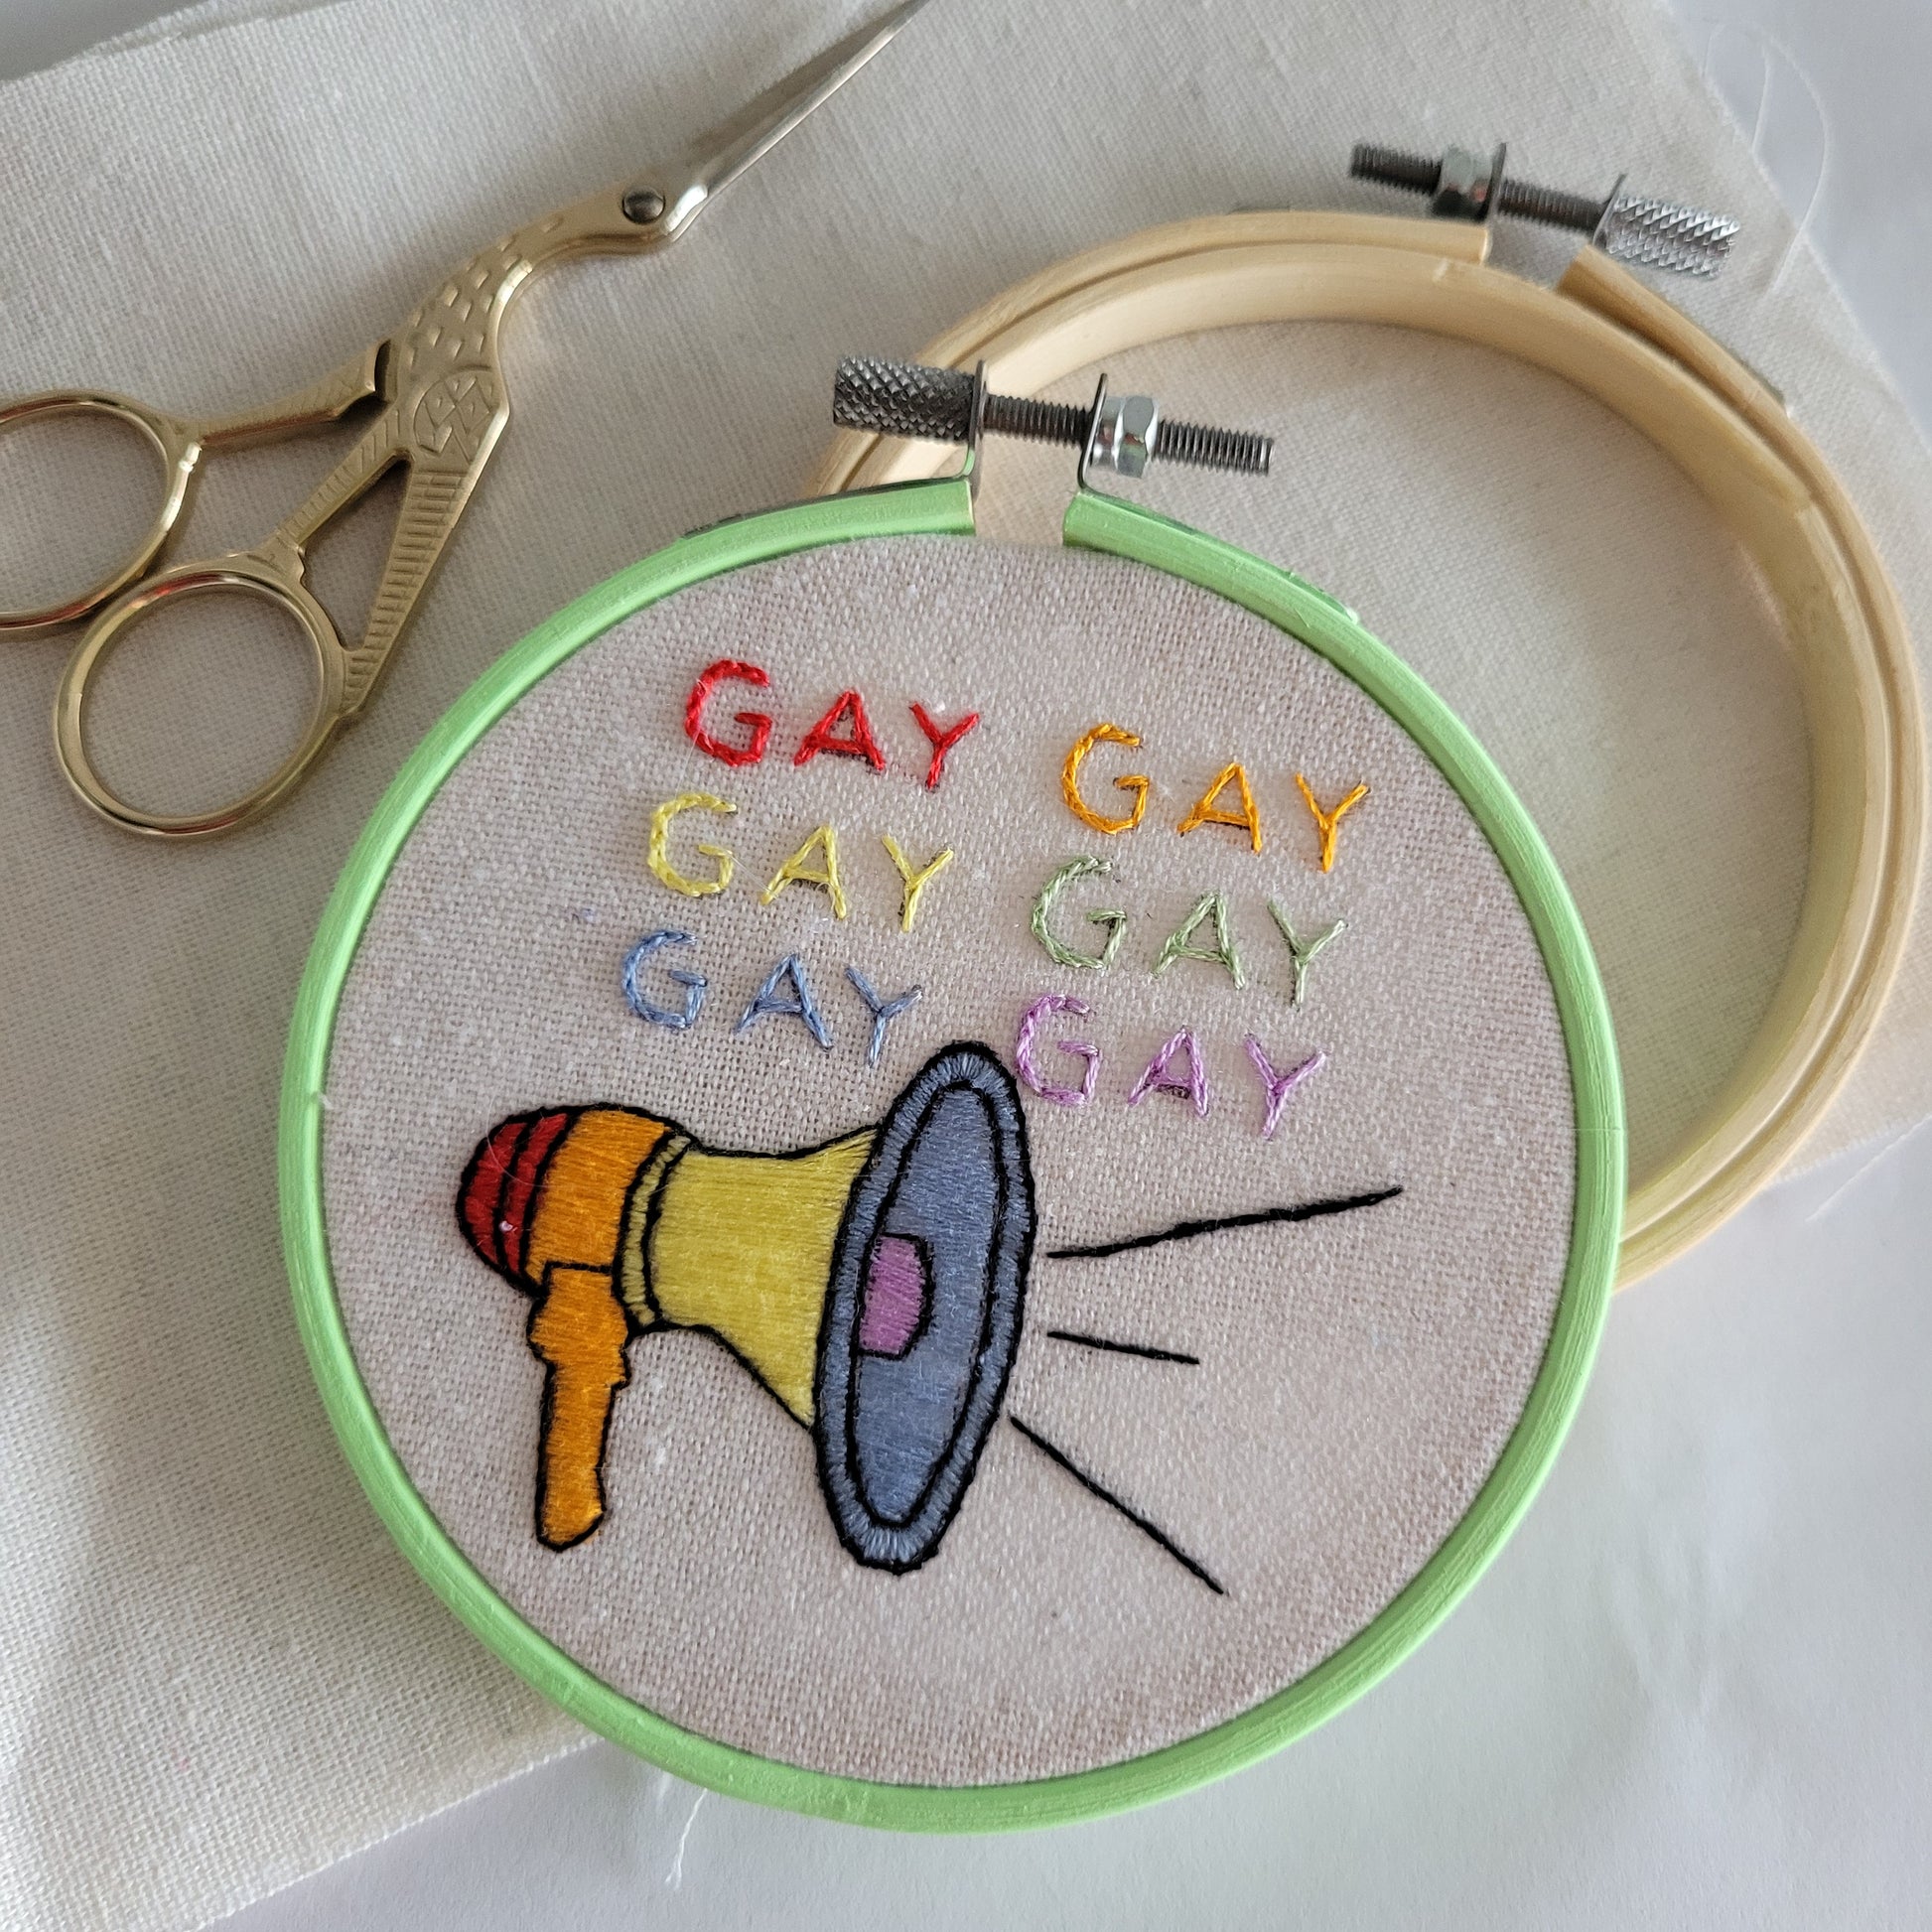 GAY GAY GAY GAY GAY GAY with a rainbow megaphone